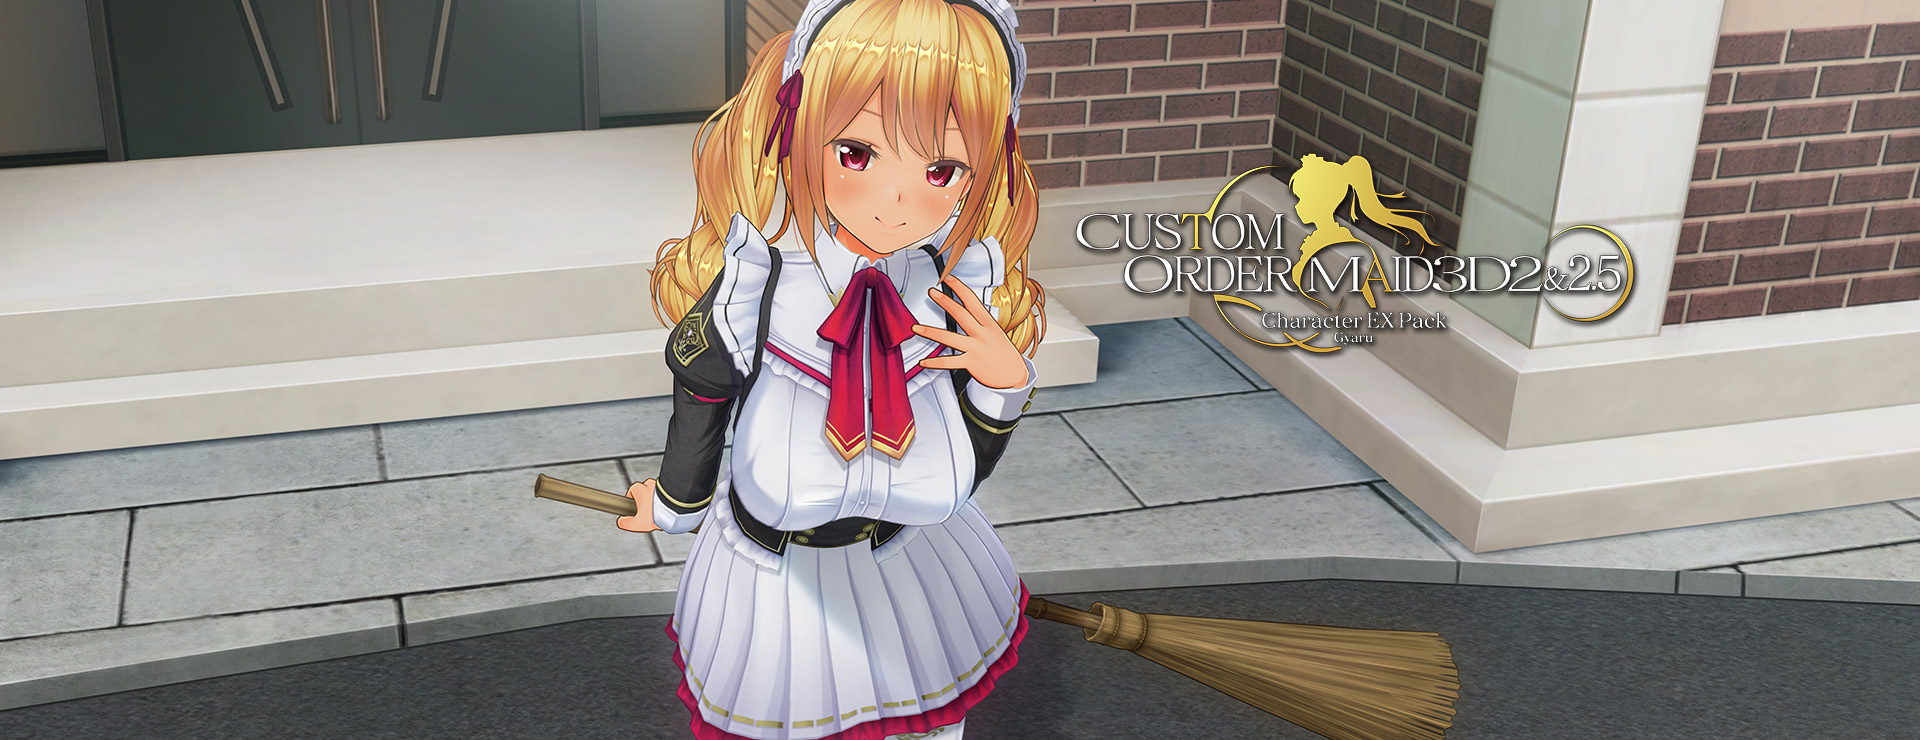 Custom Order Maid 3D 2: Character EX Pack Gyaru High Poly All In One Edition - シミュレーション ゲーム